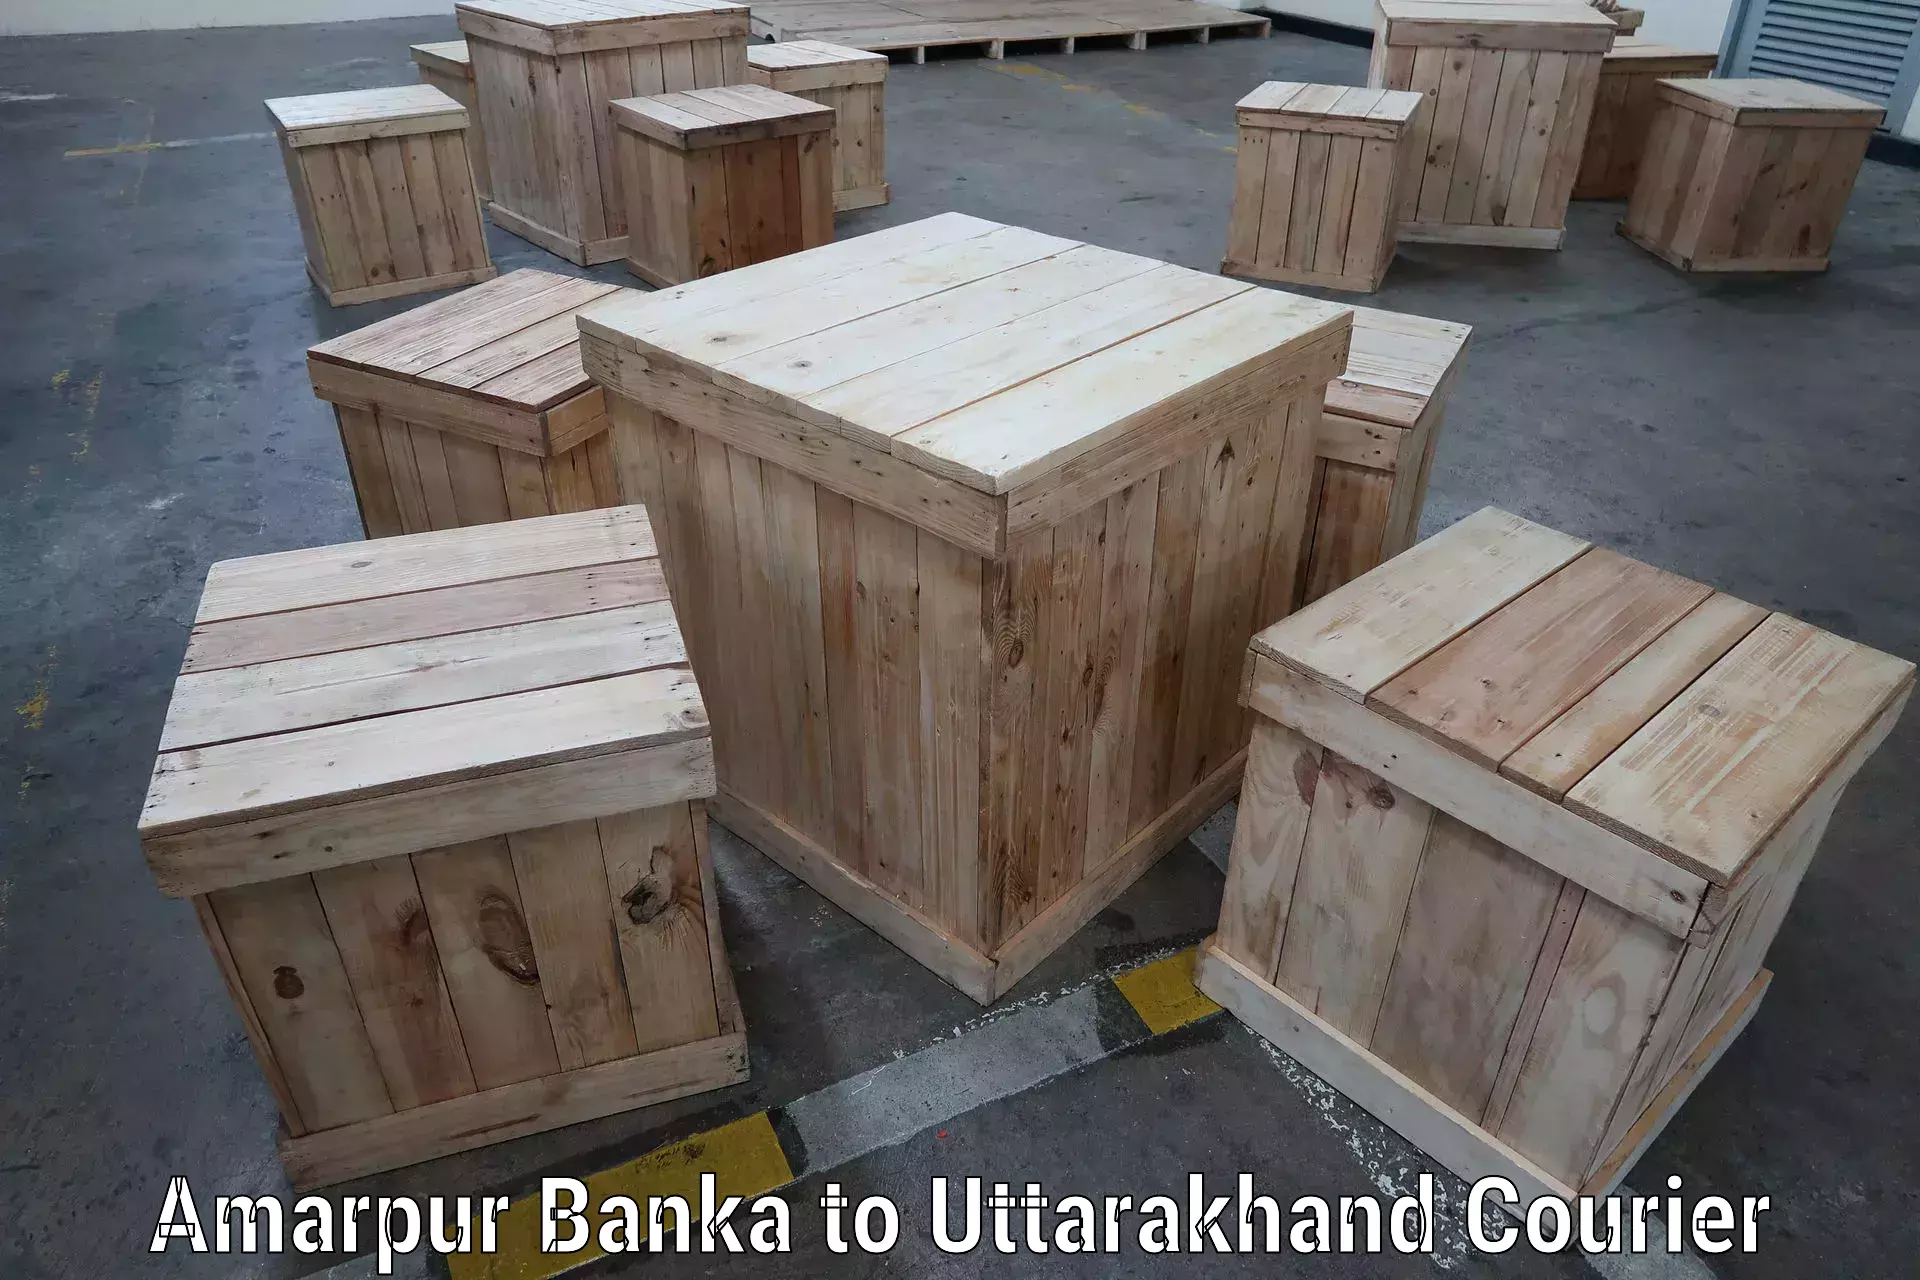 Package delivery network Amarpur Banka to Uttarakhand